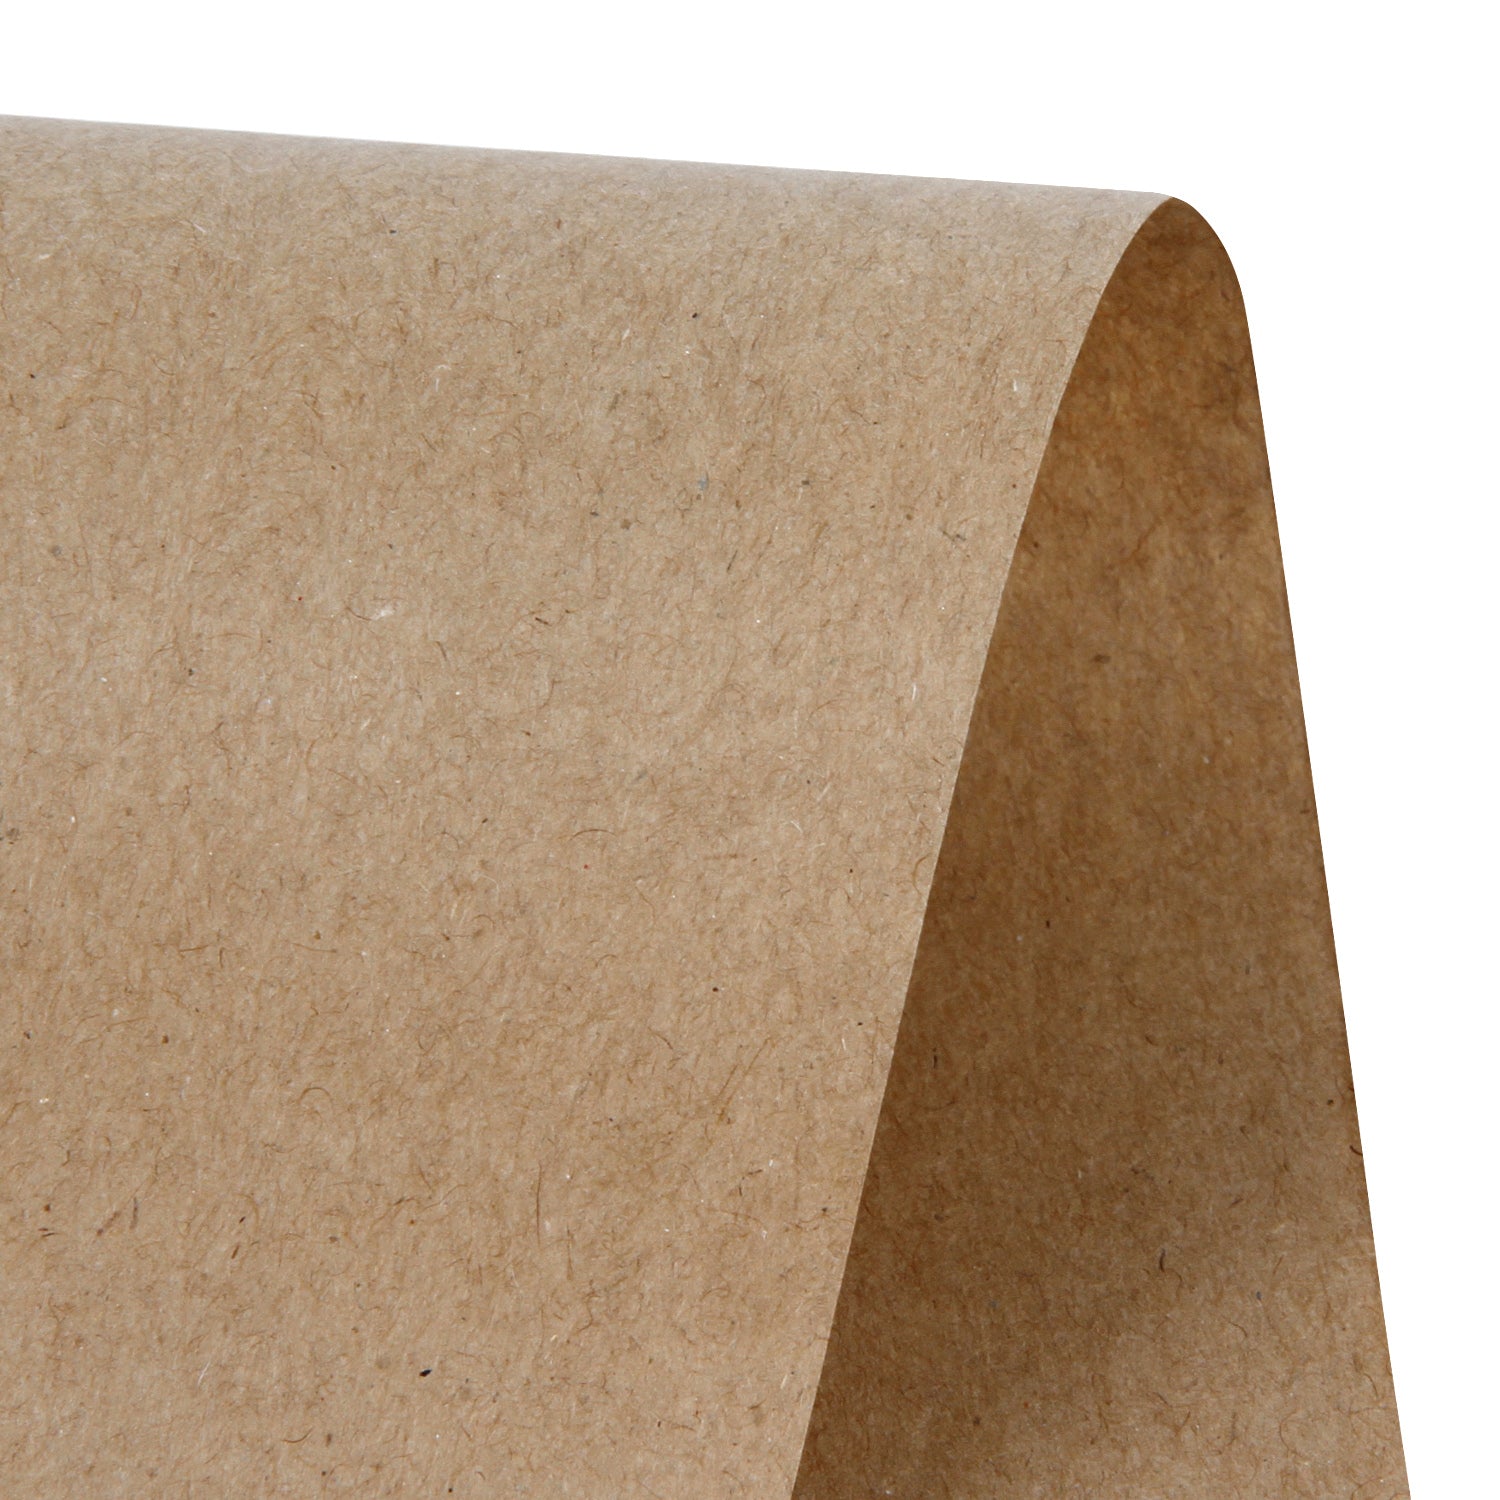 Brown Recycled Kraft Paper Roll - 24x900', 40lb